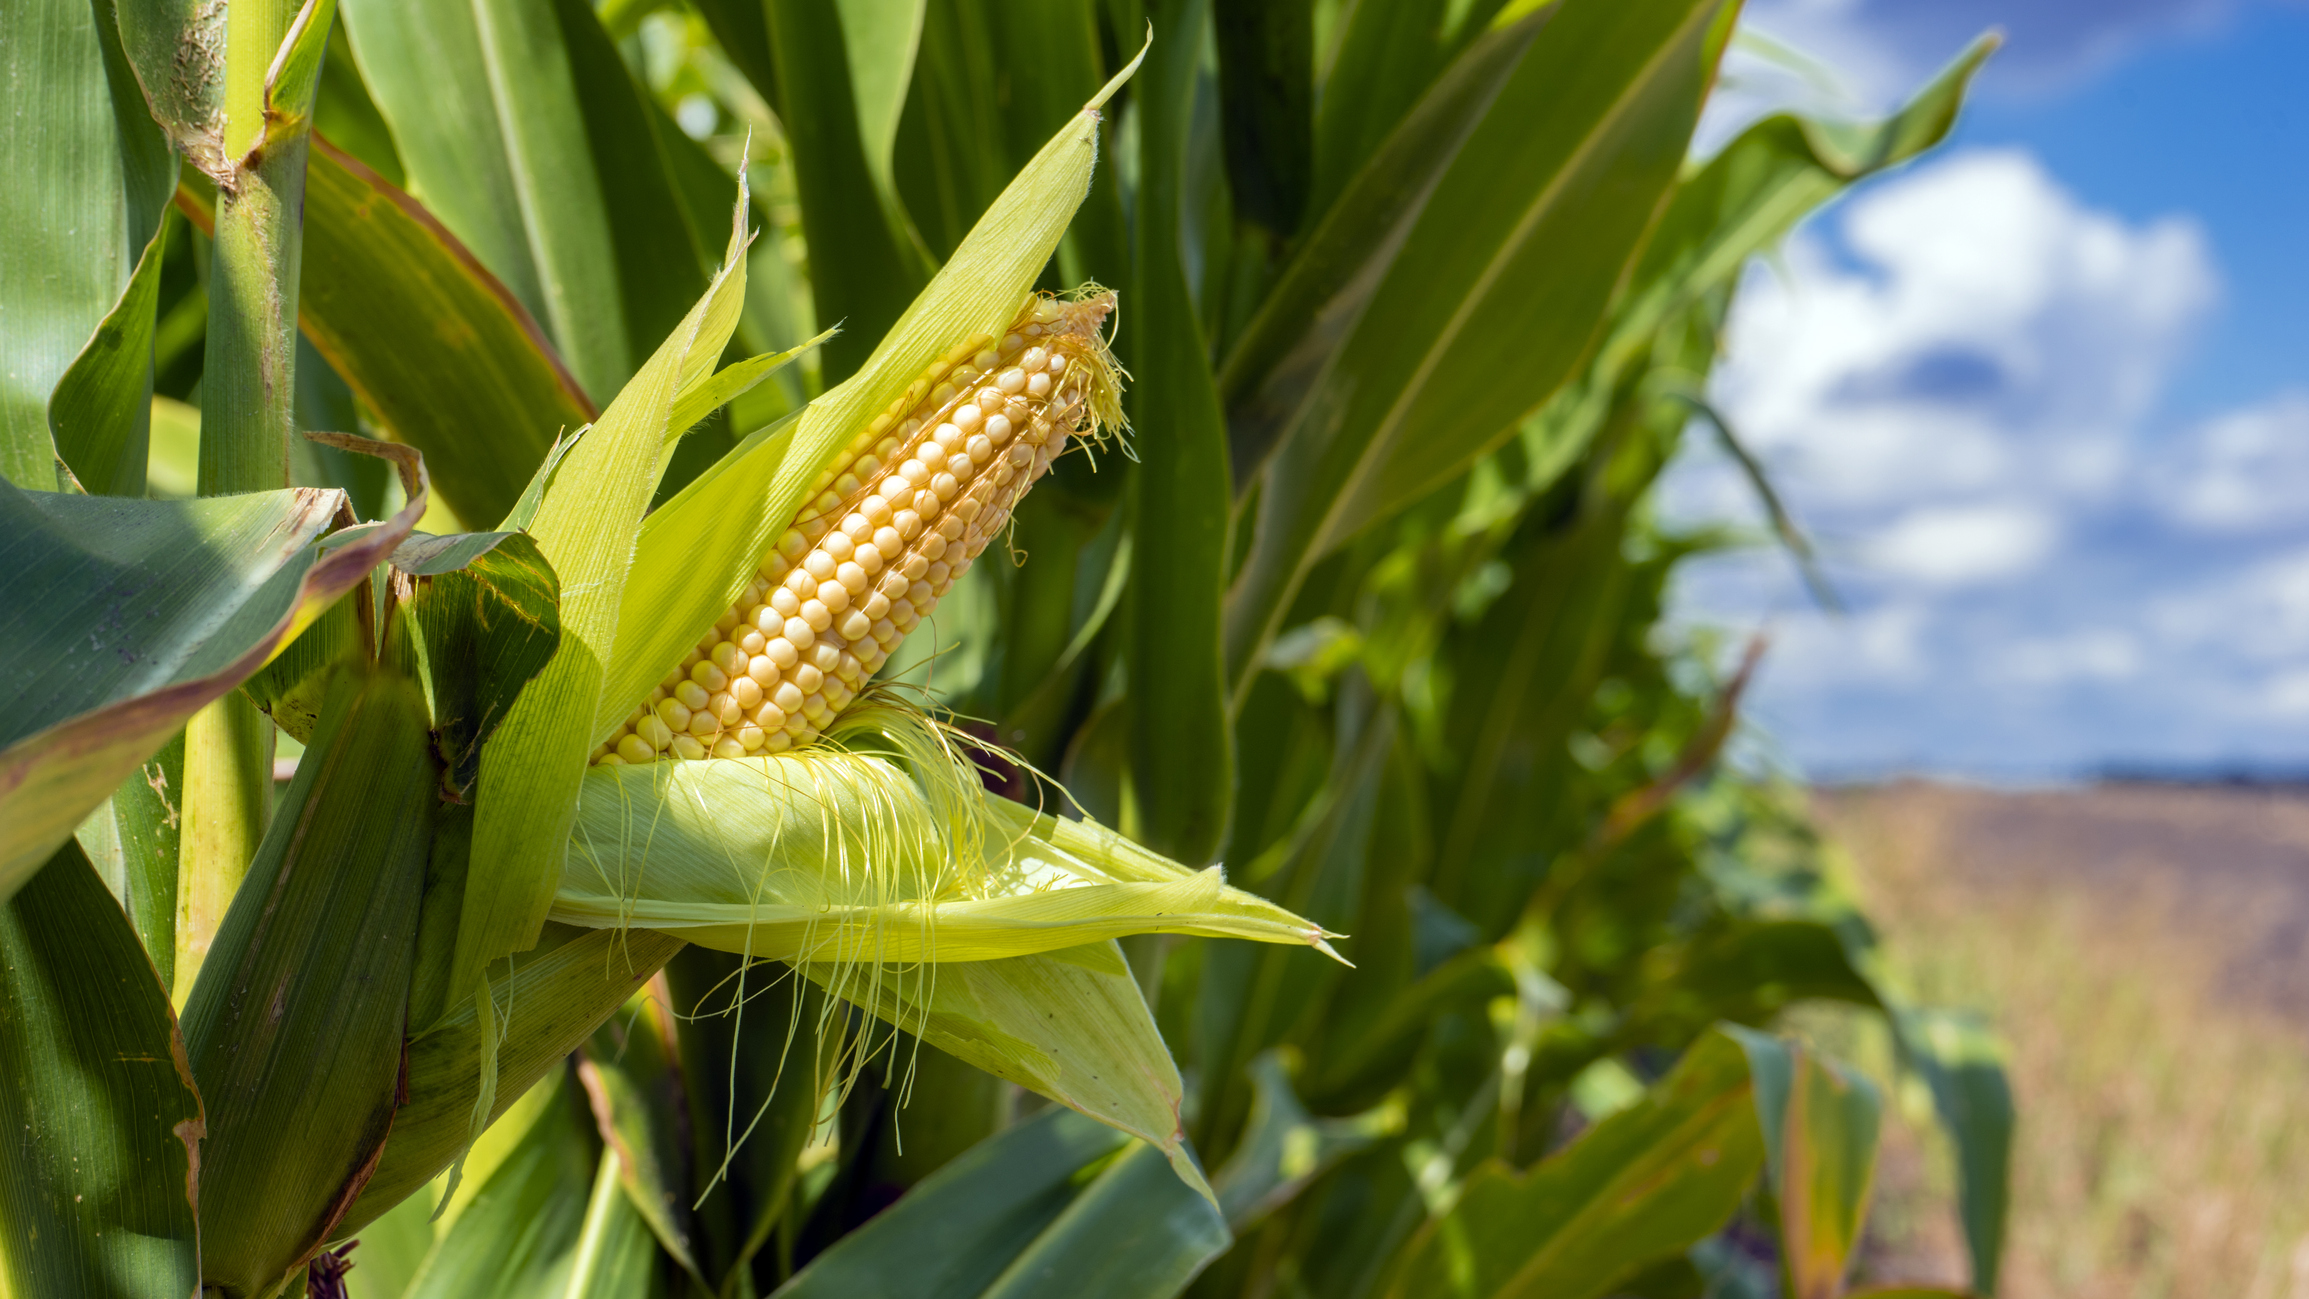 Research show that BioshHydrogel benefits maize